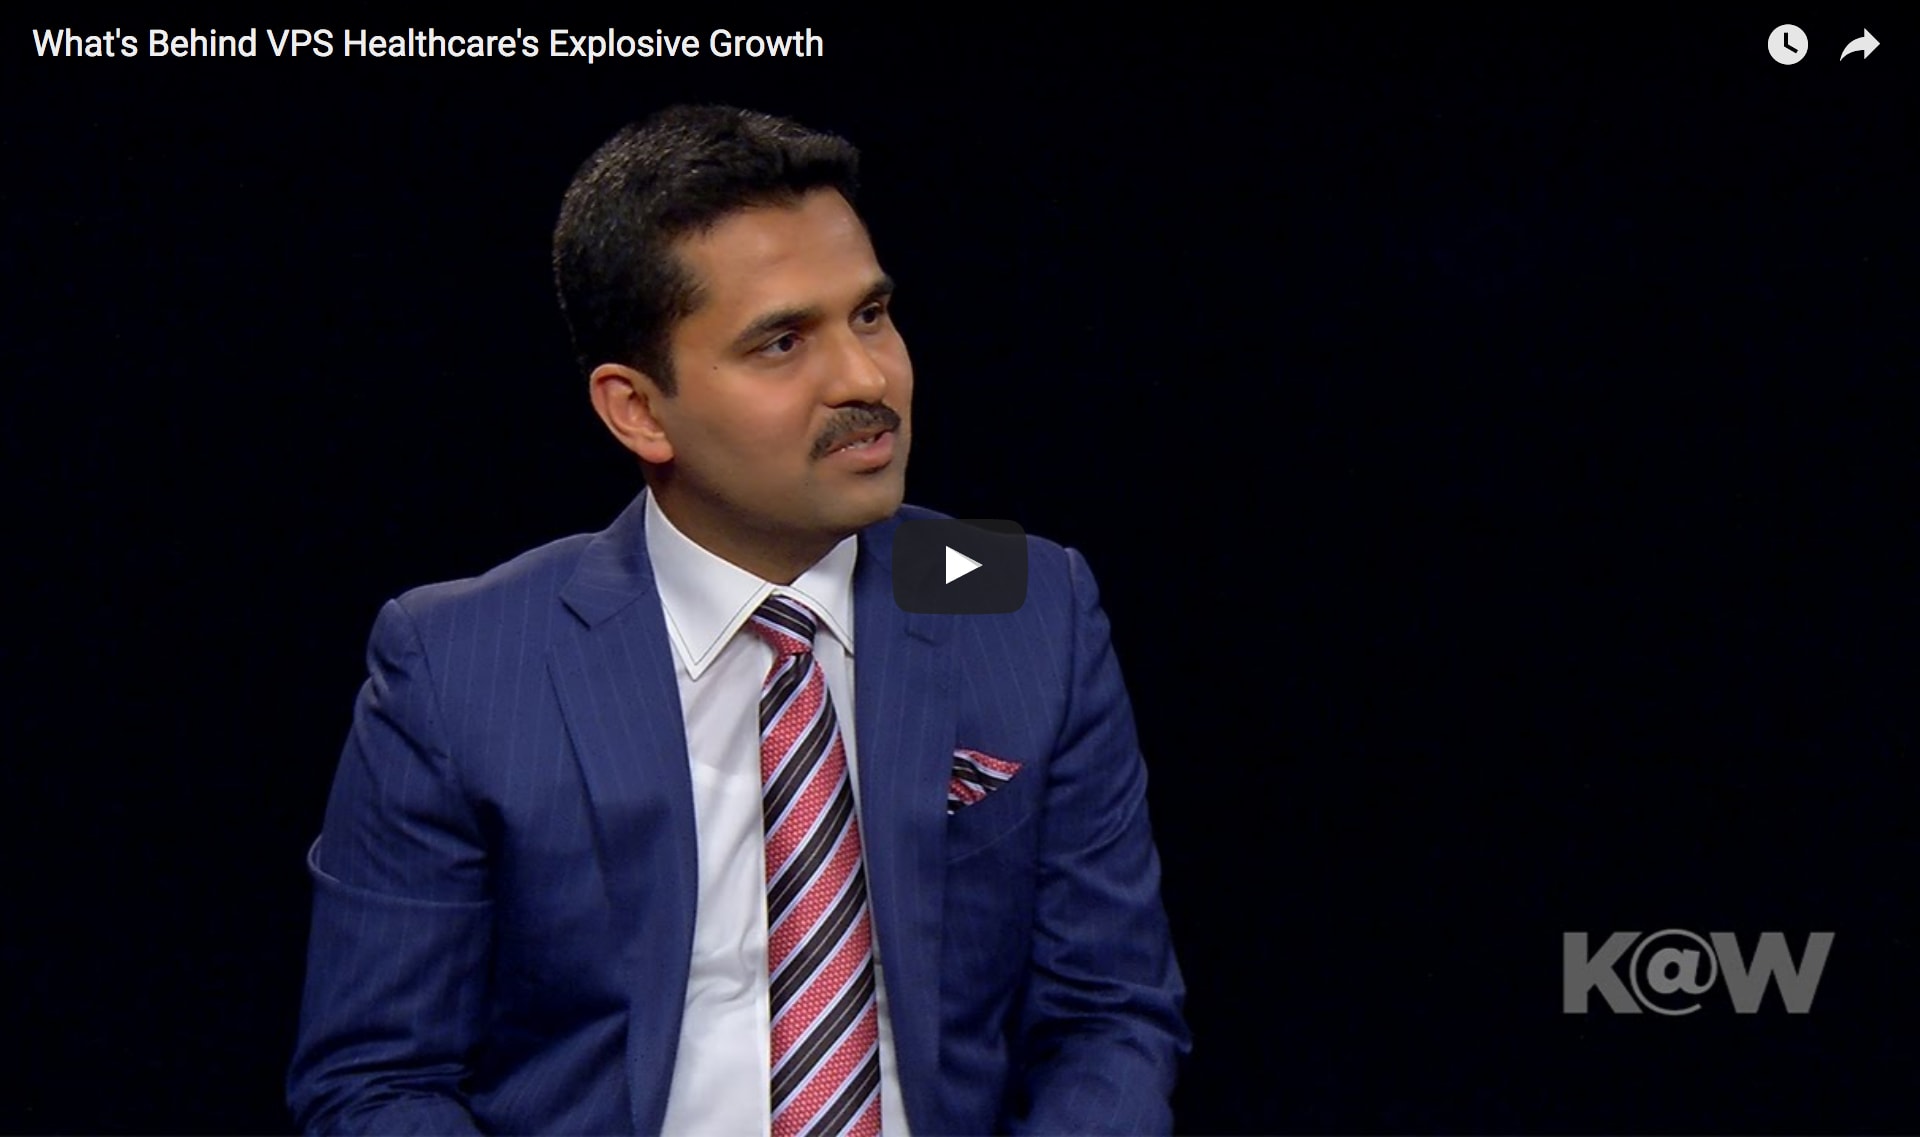 How Shamsheer Vayalil Built VPS Healthcare into a Billion-dollar Firm